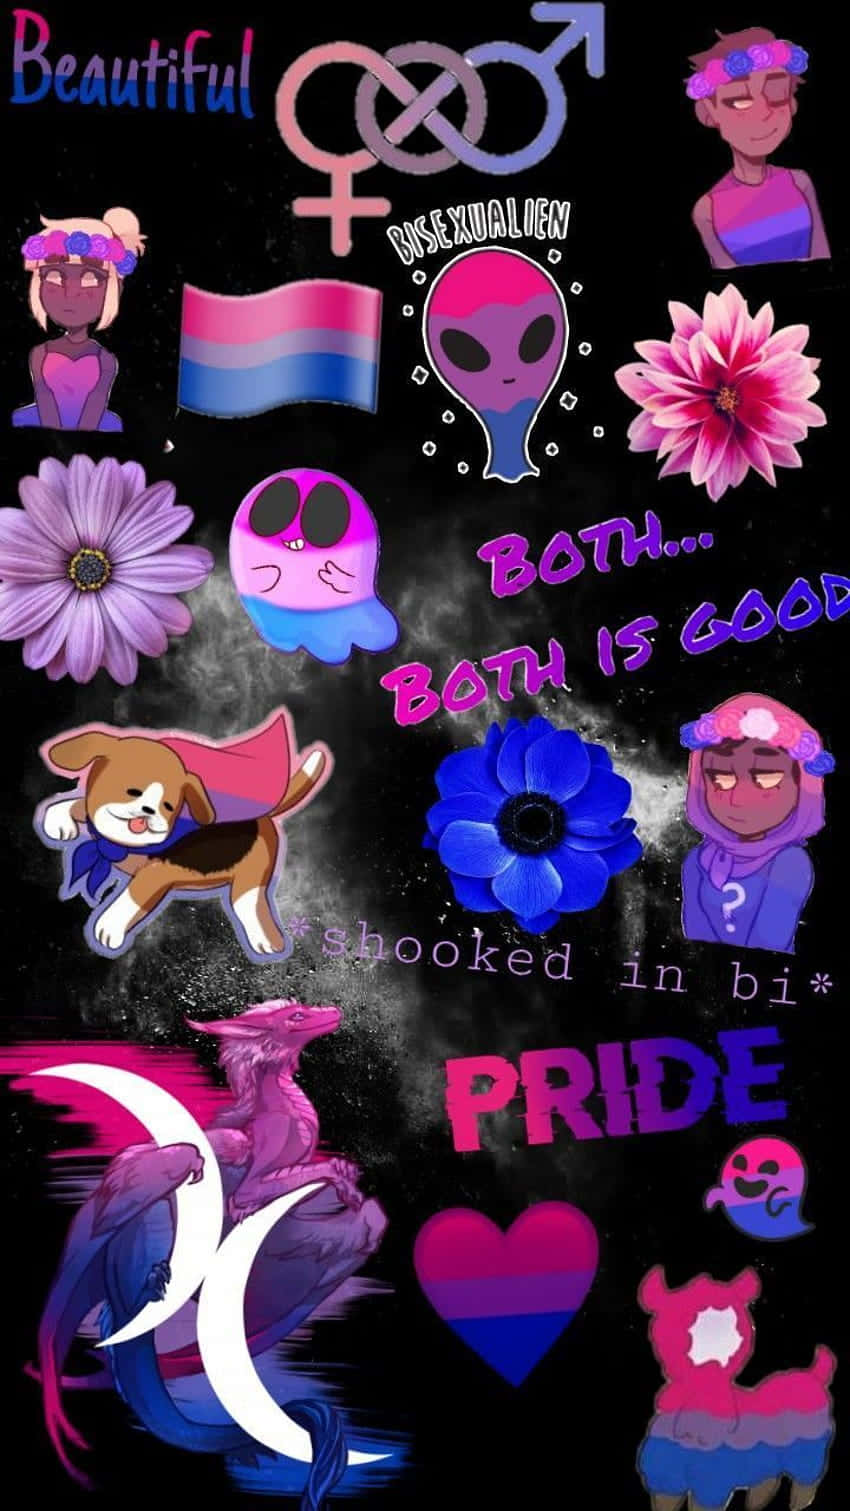 Bisexual Pride Collage Wallpaper